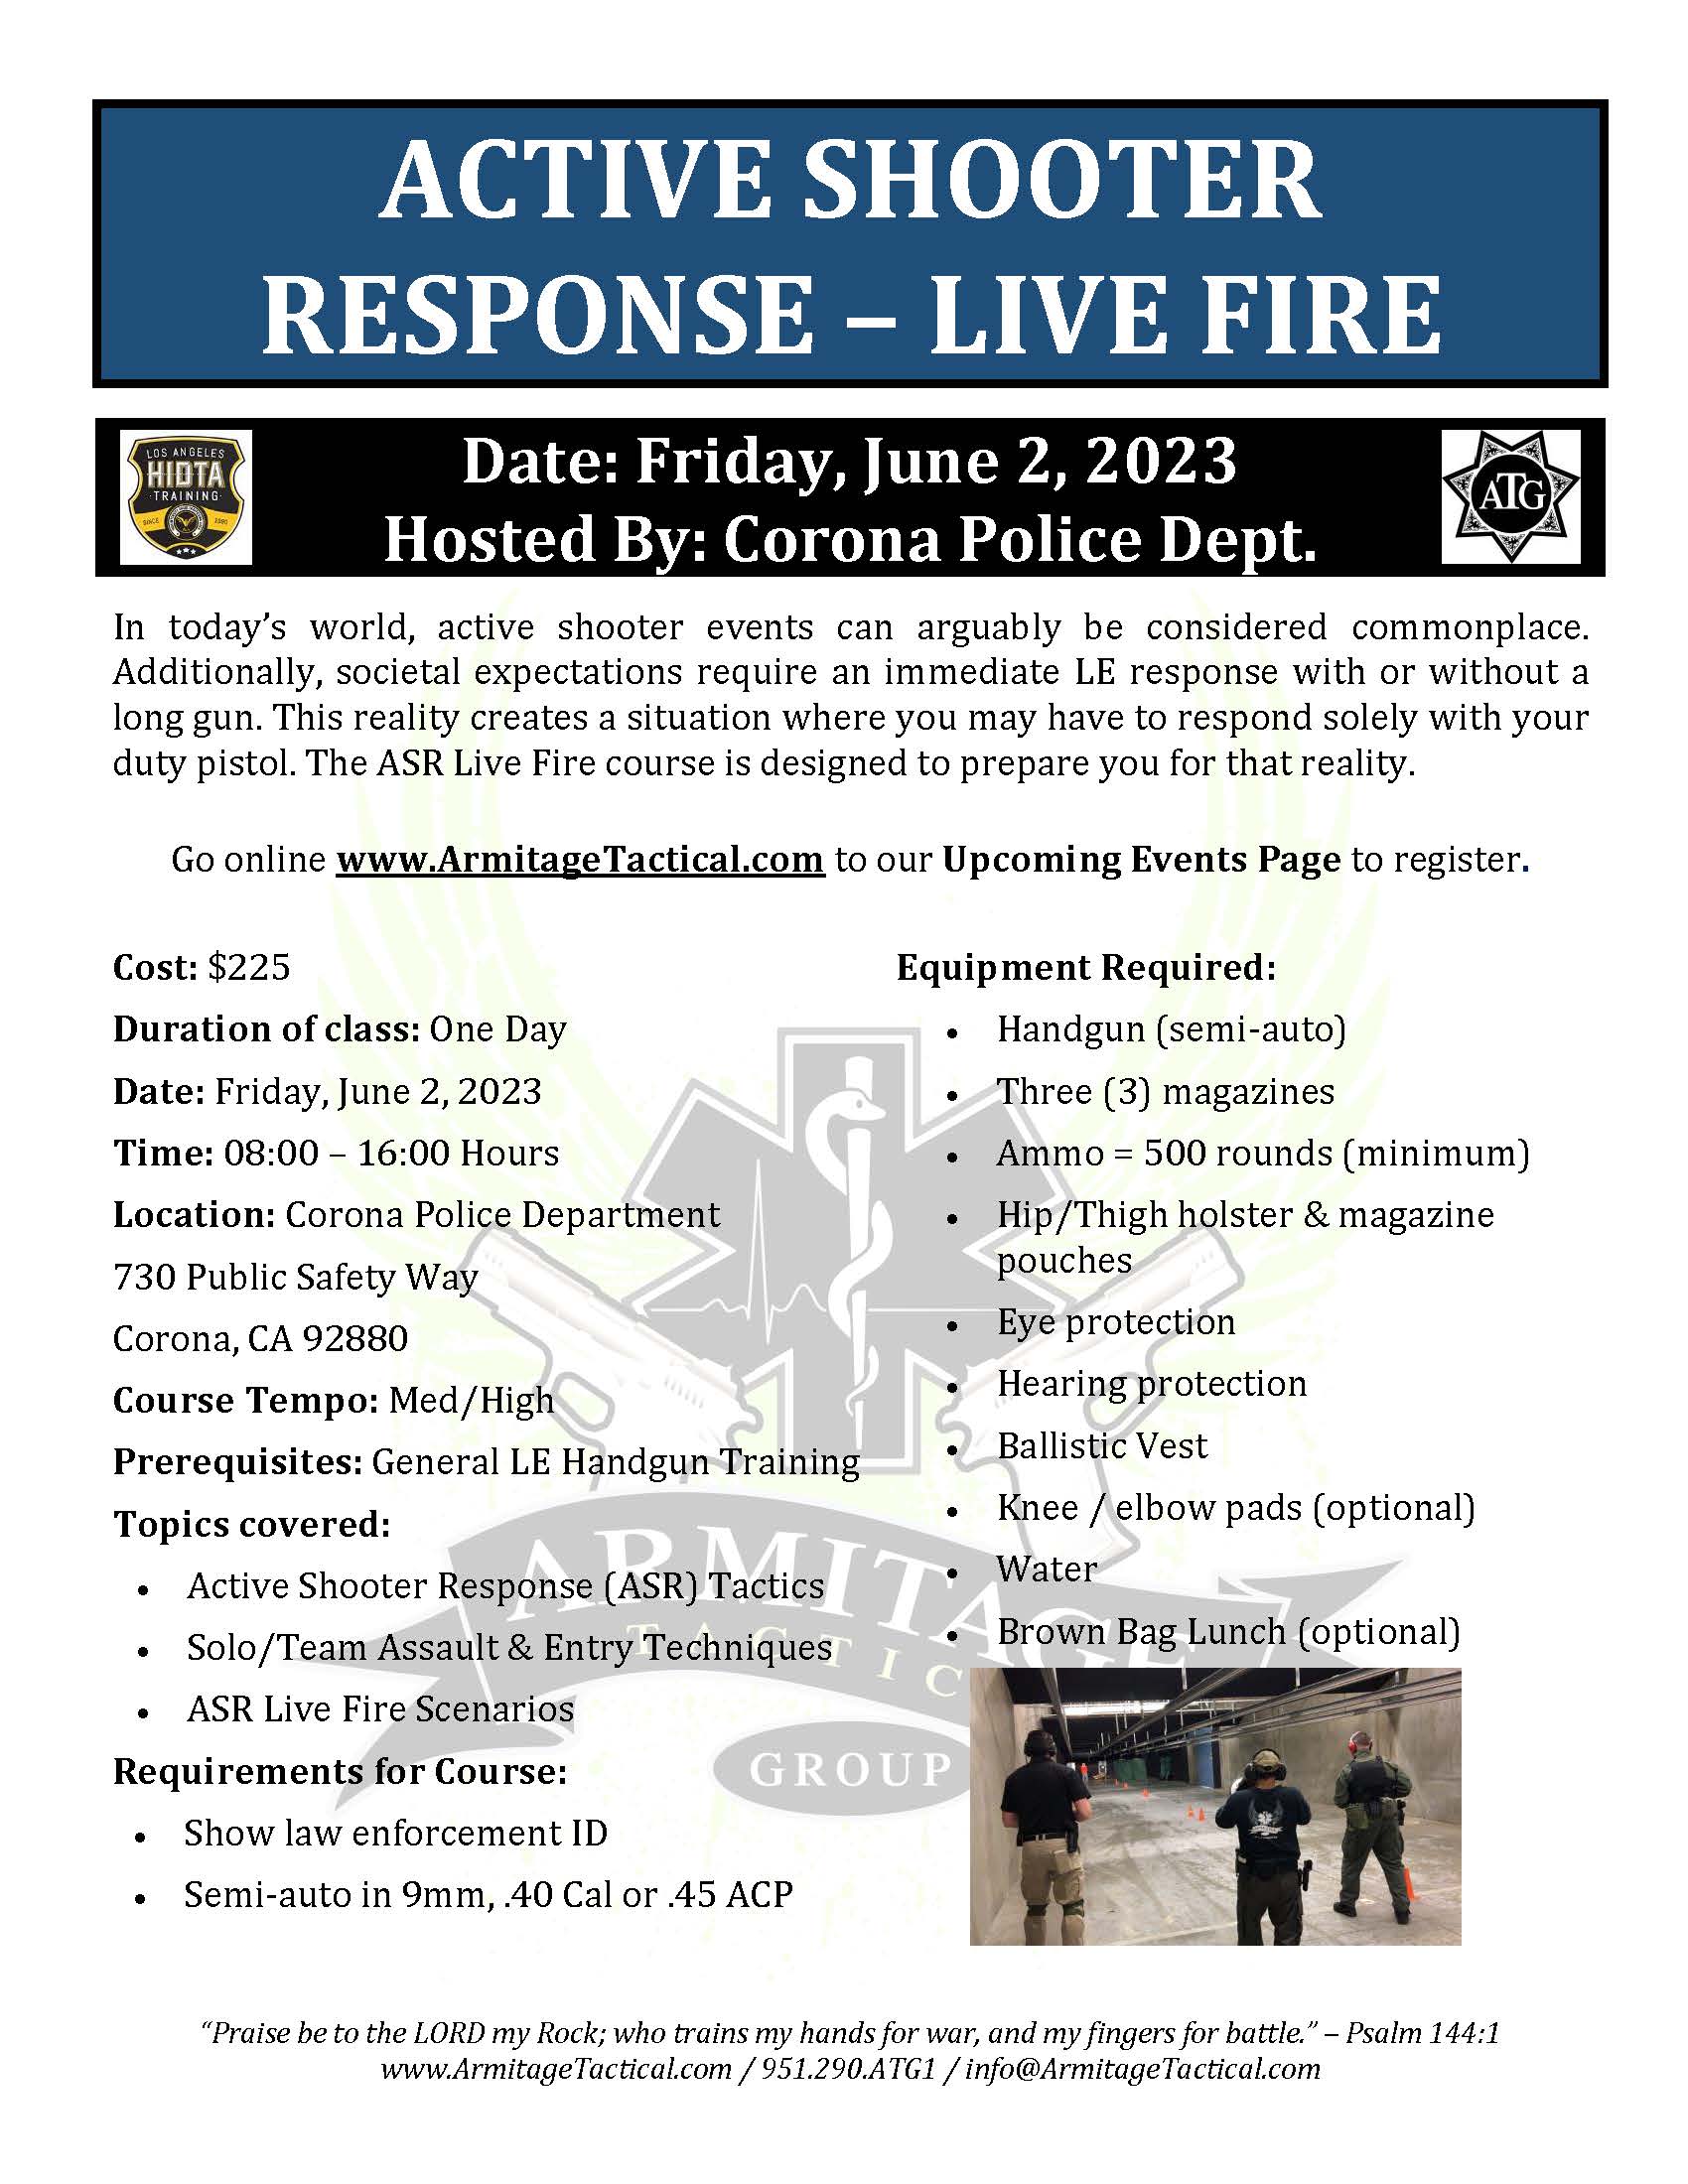 2023/06/02 - Active Shooter Response Live Fire - Corona, CA